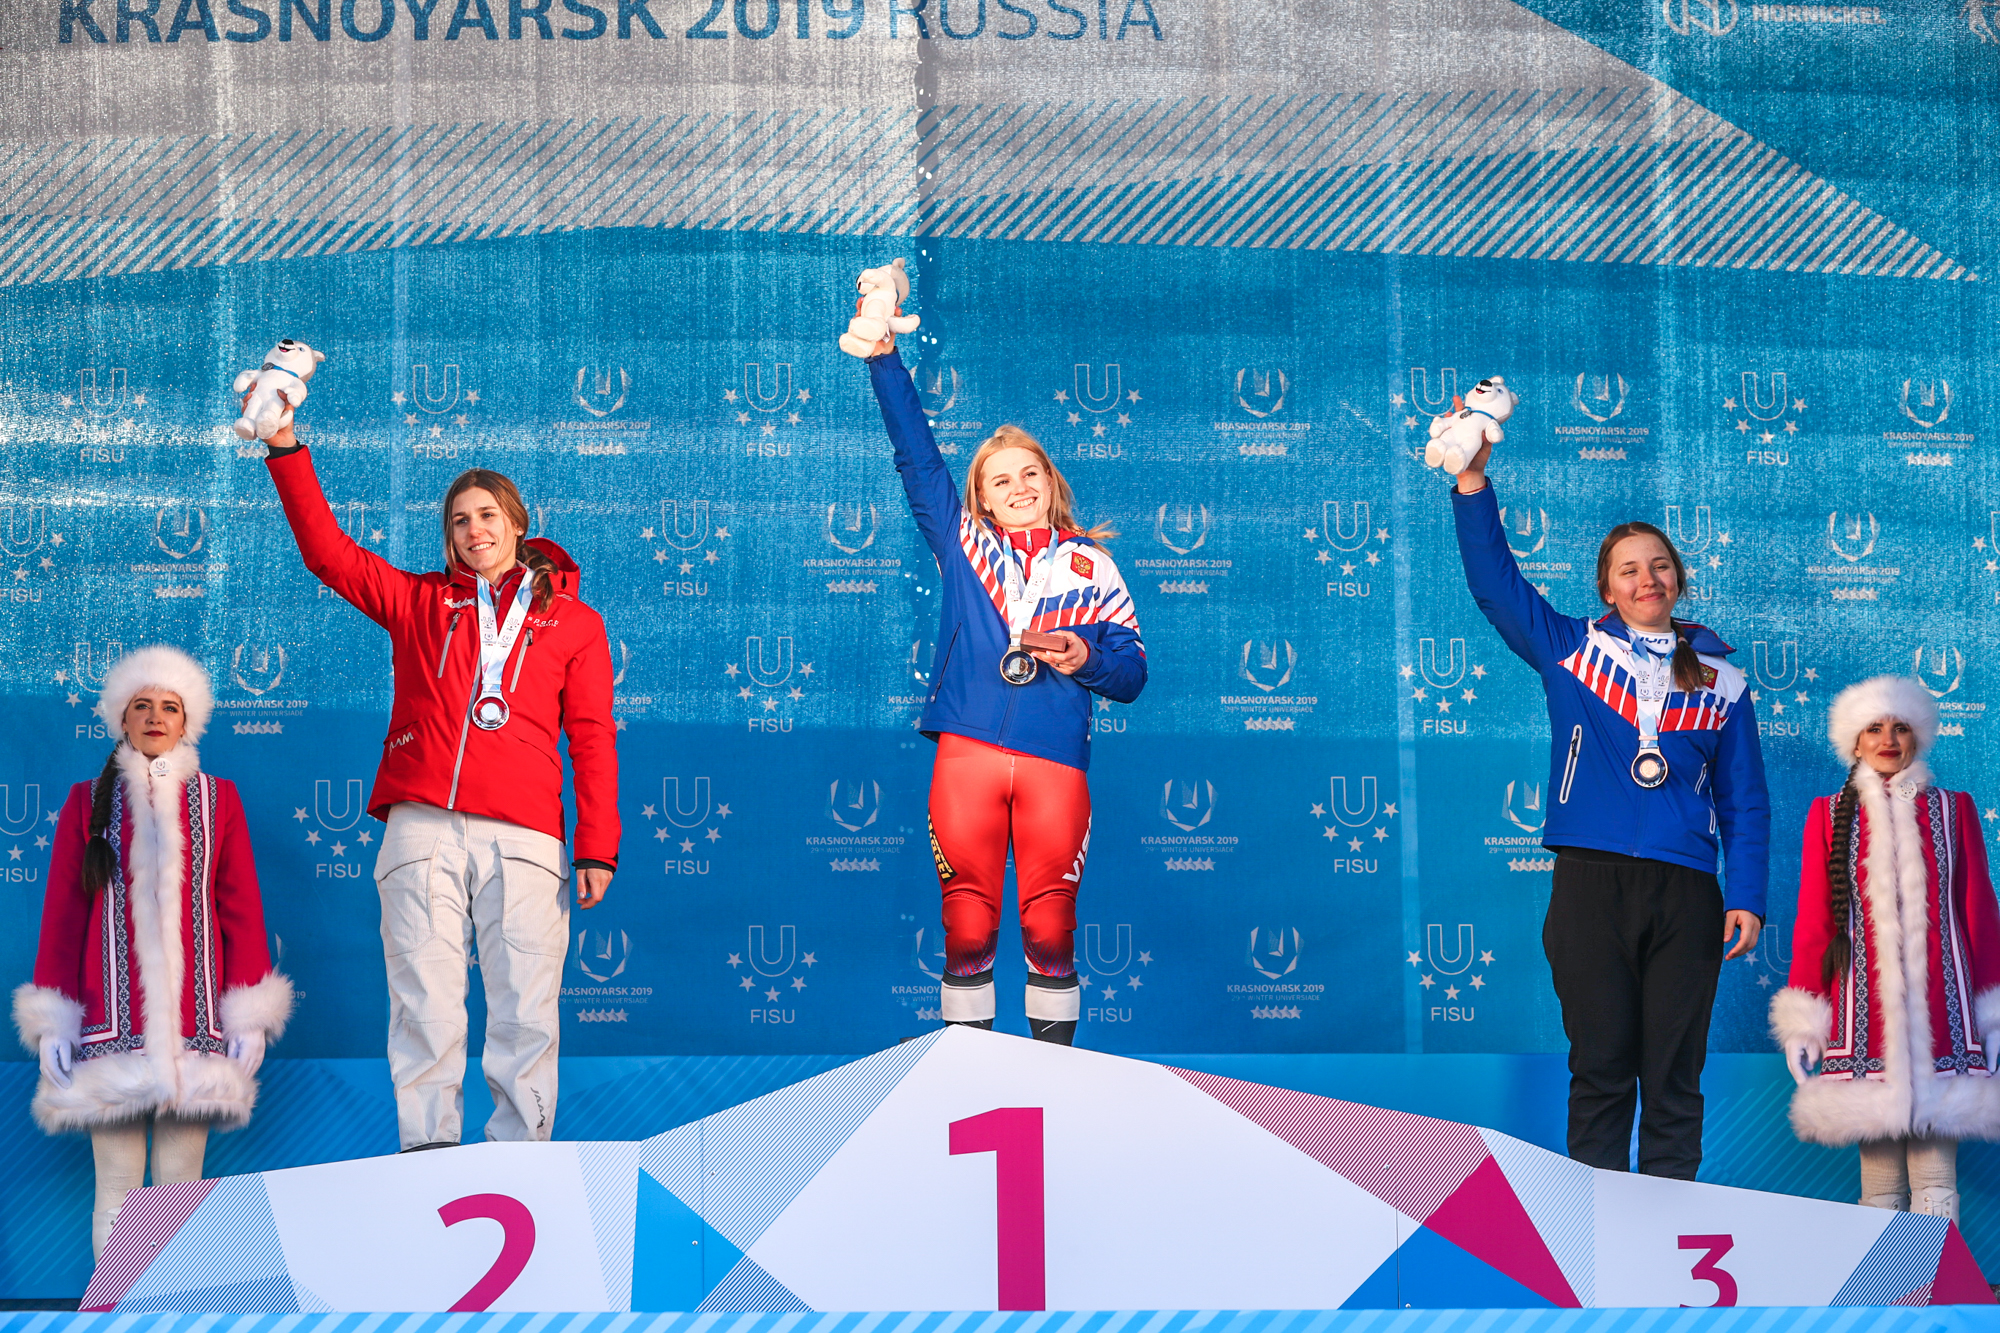 Ekaterina Tkachenko won the women's giant slalom competition ©Krasnoyarsk 2019